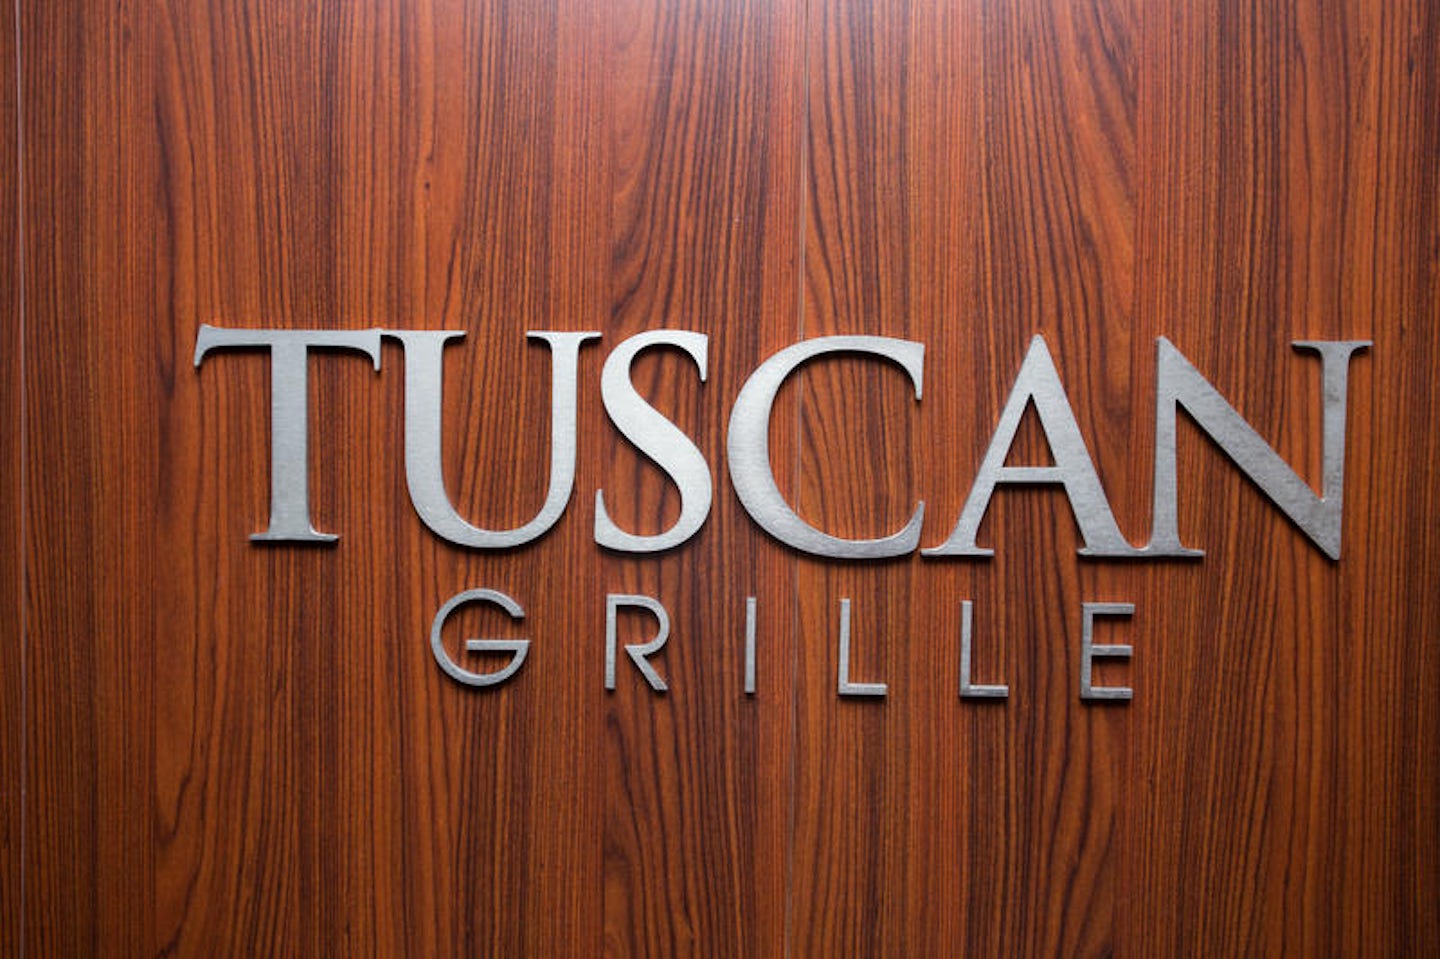 Tuscan Grille on Celebrity Solstice